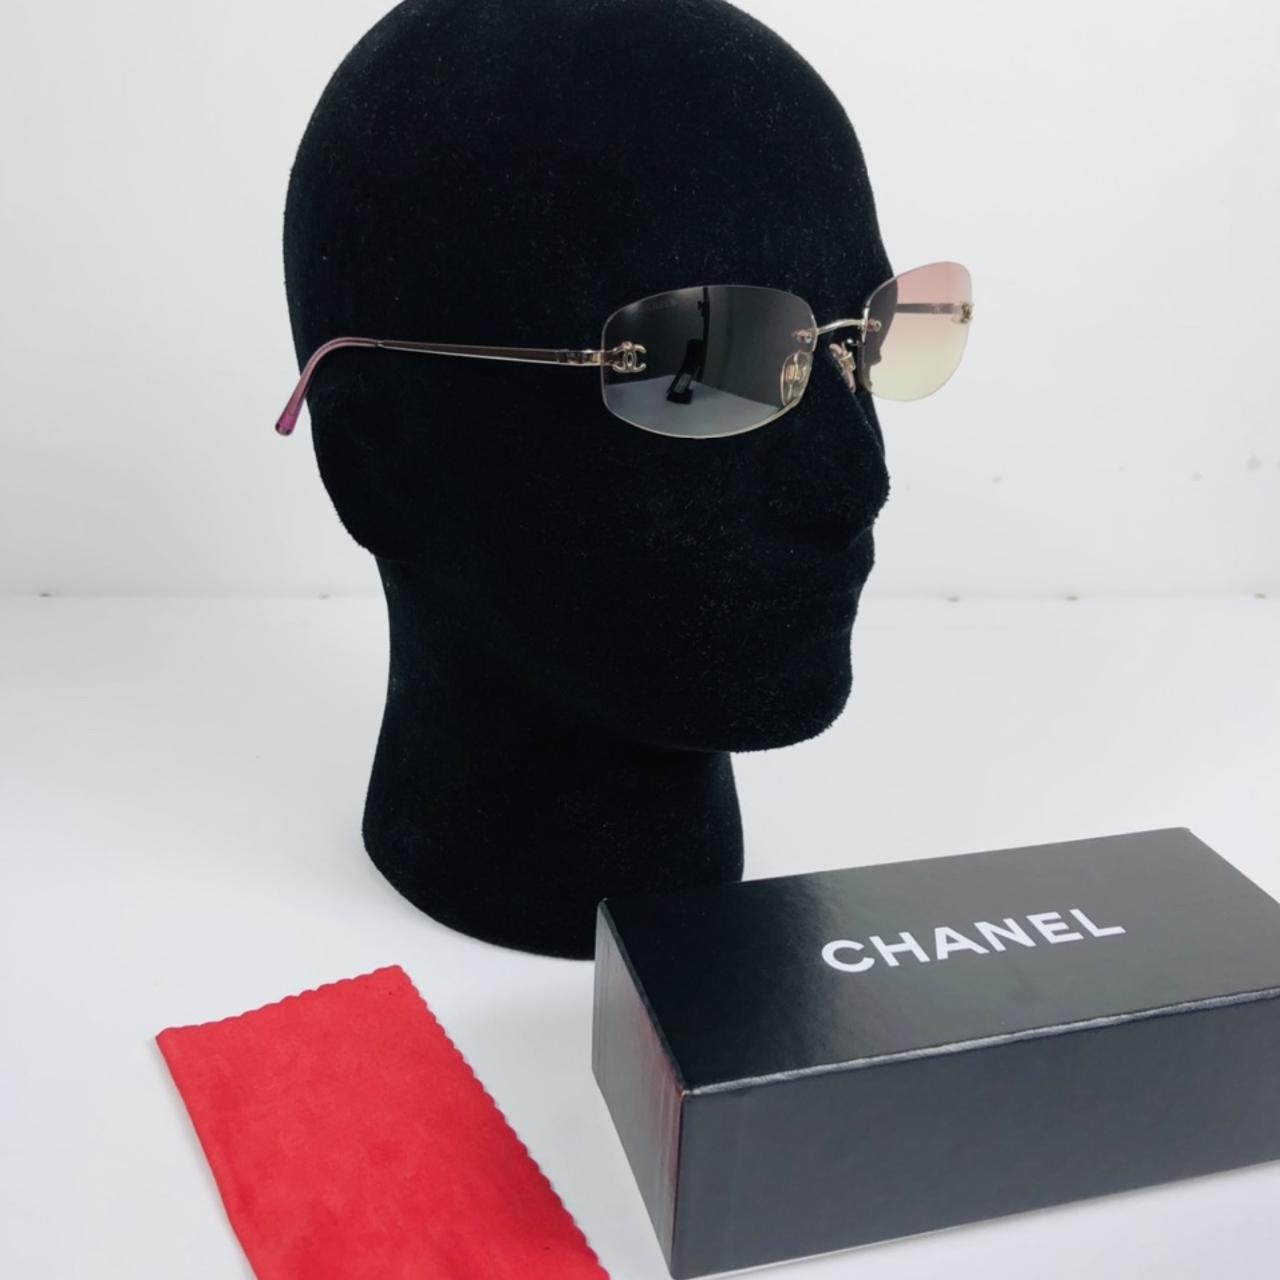 Chanel Vintage Sunglasses 4002 In very good - Depop